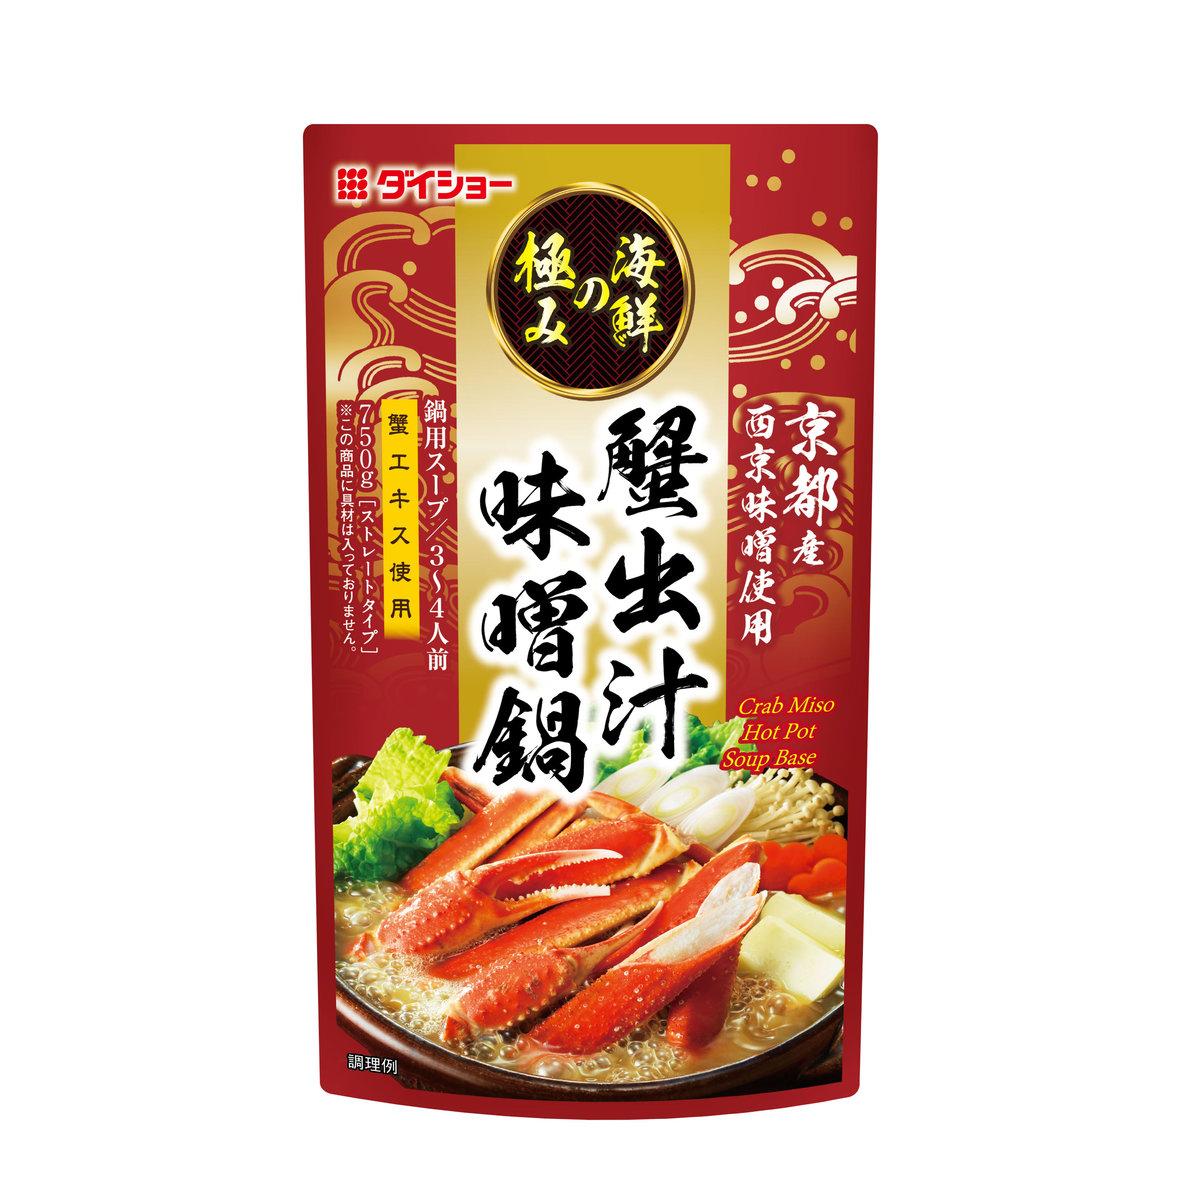 daisho-crab-miso-hotpot-soup